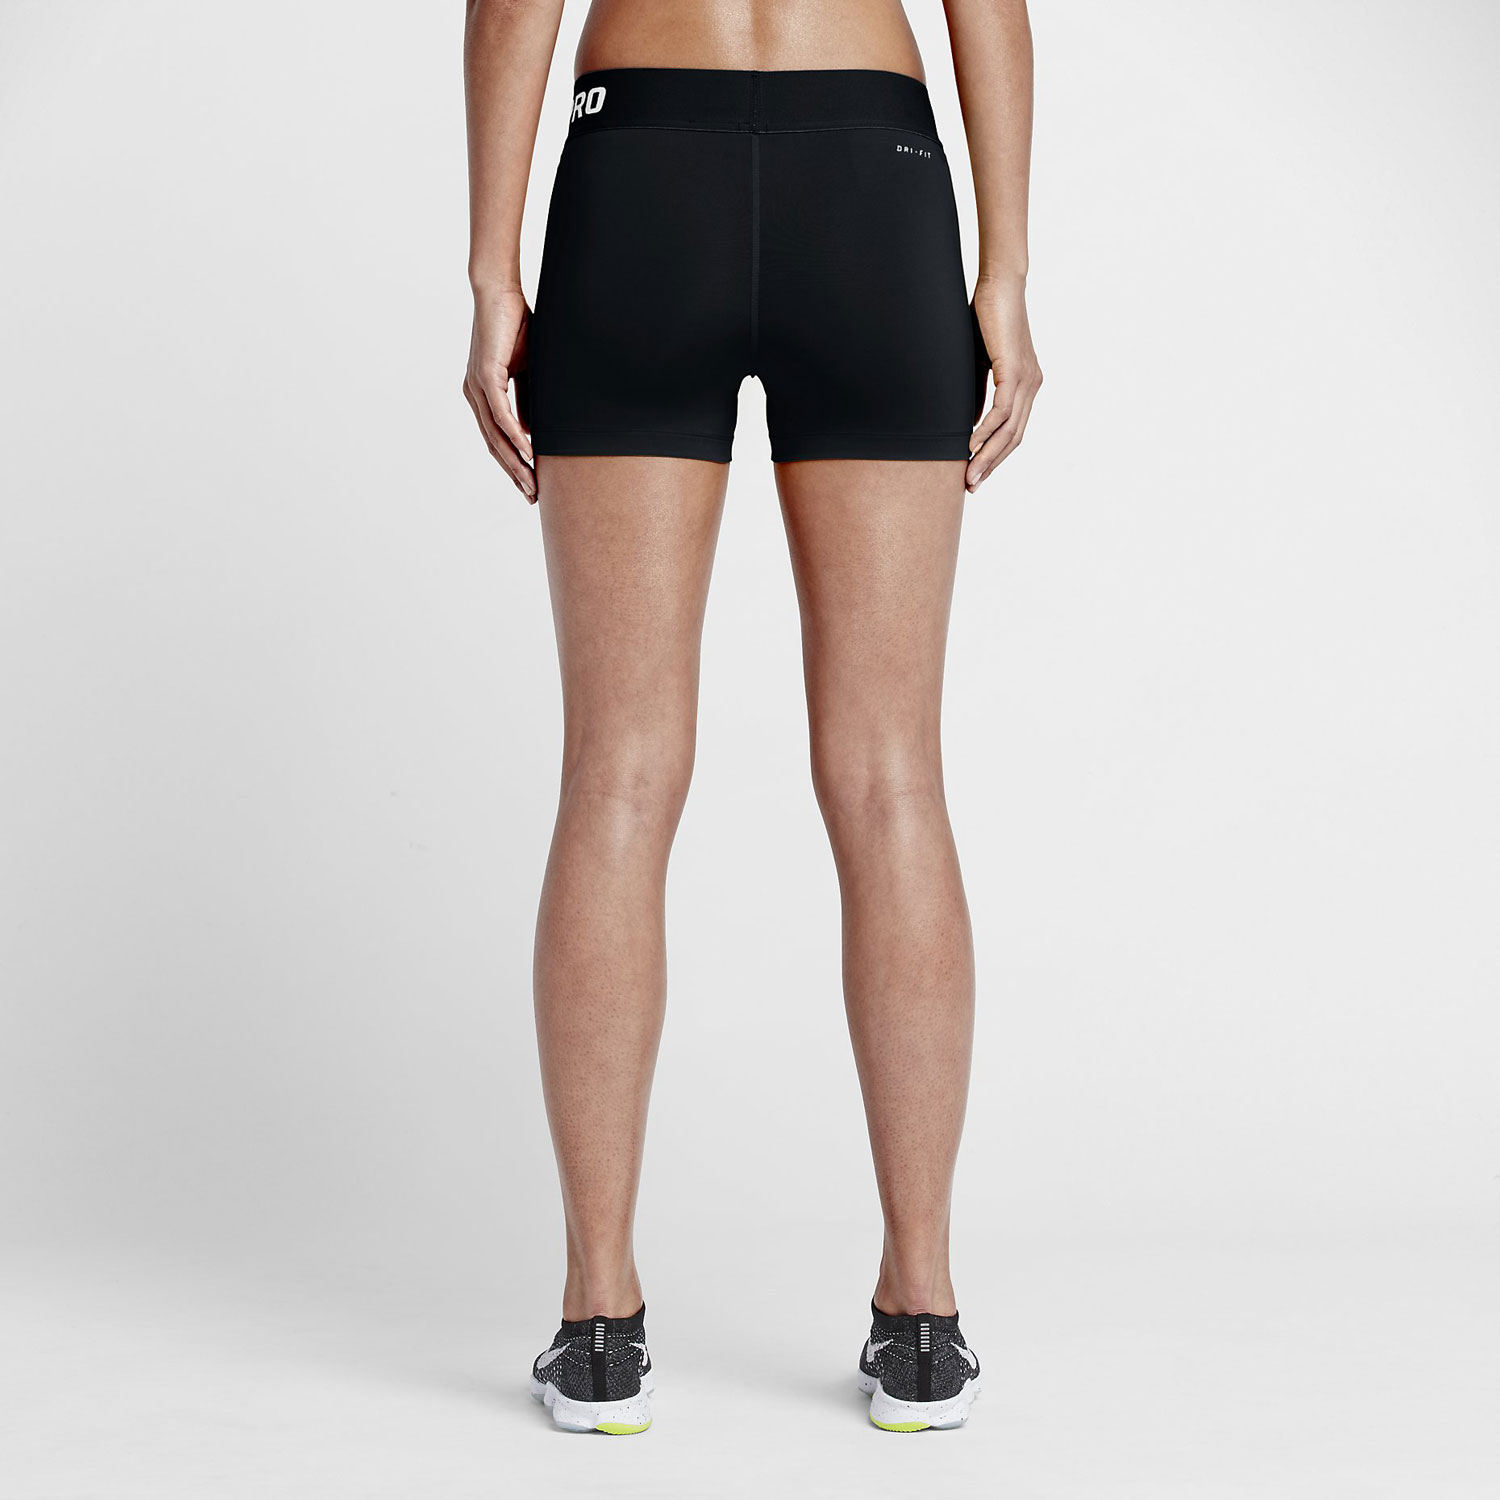 PRO 3 COOL SHORT - Women’s sports shorts